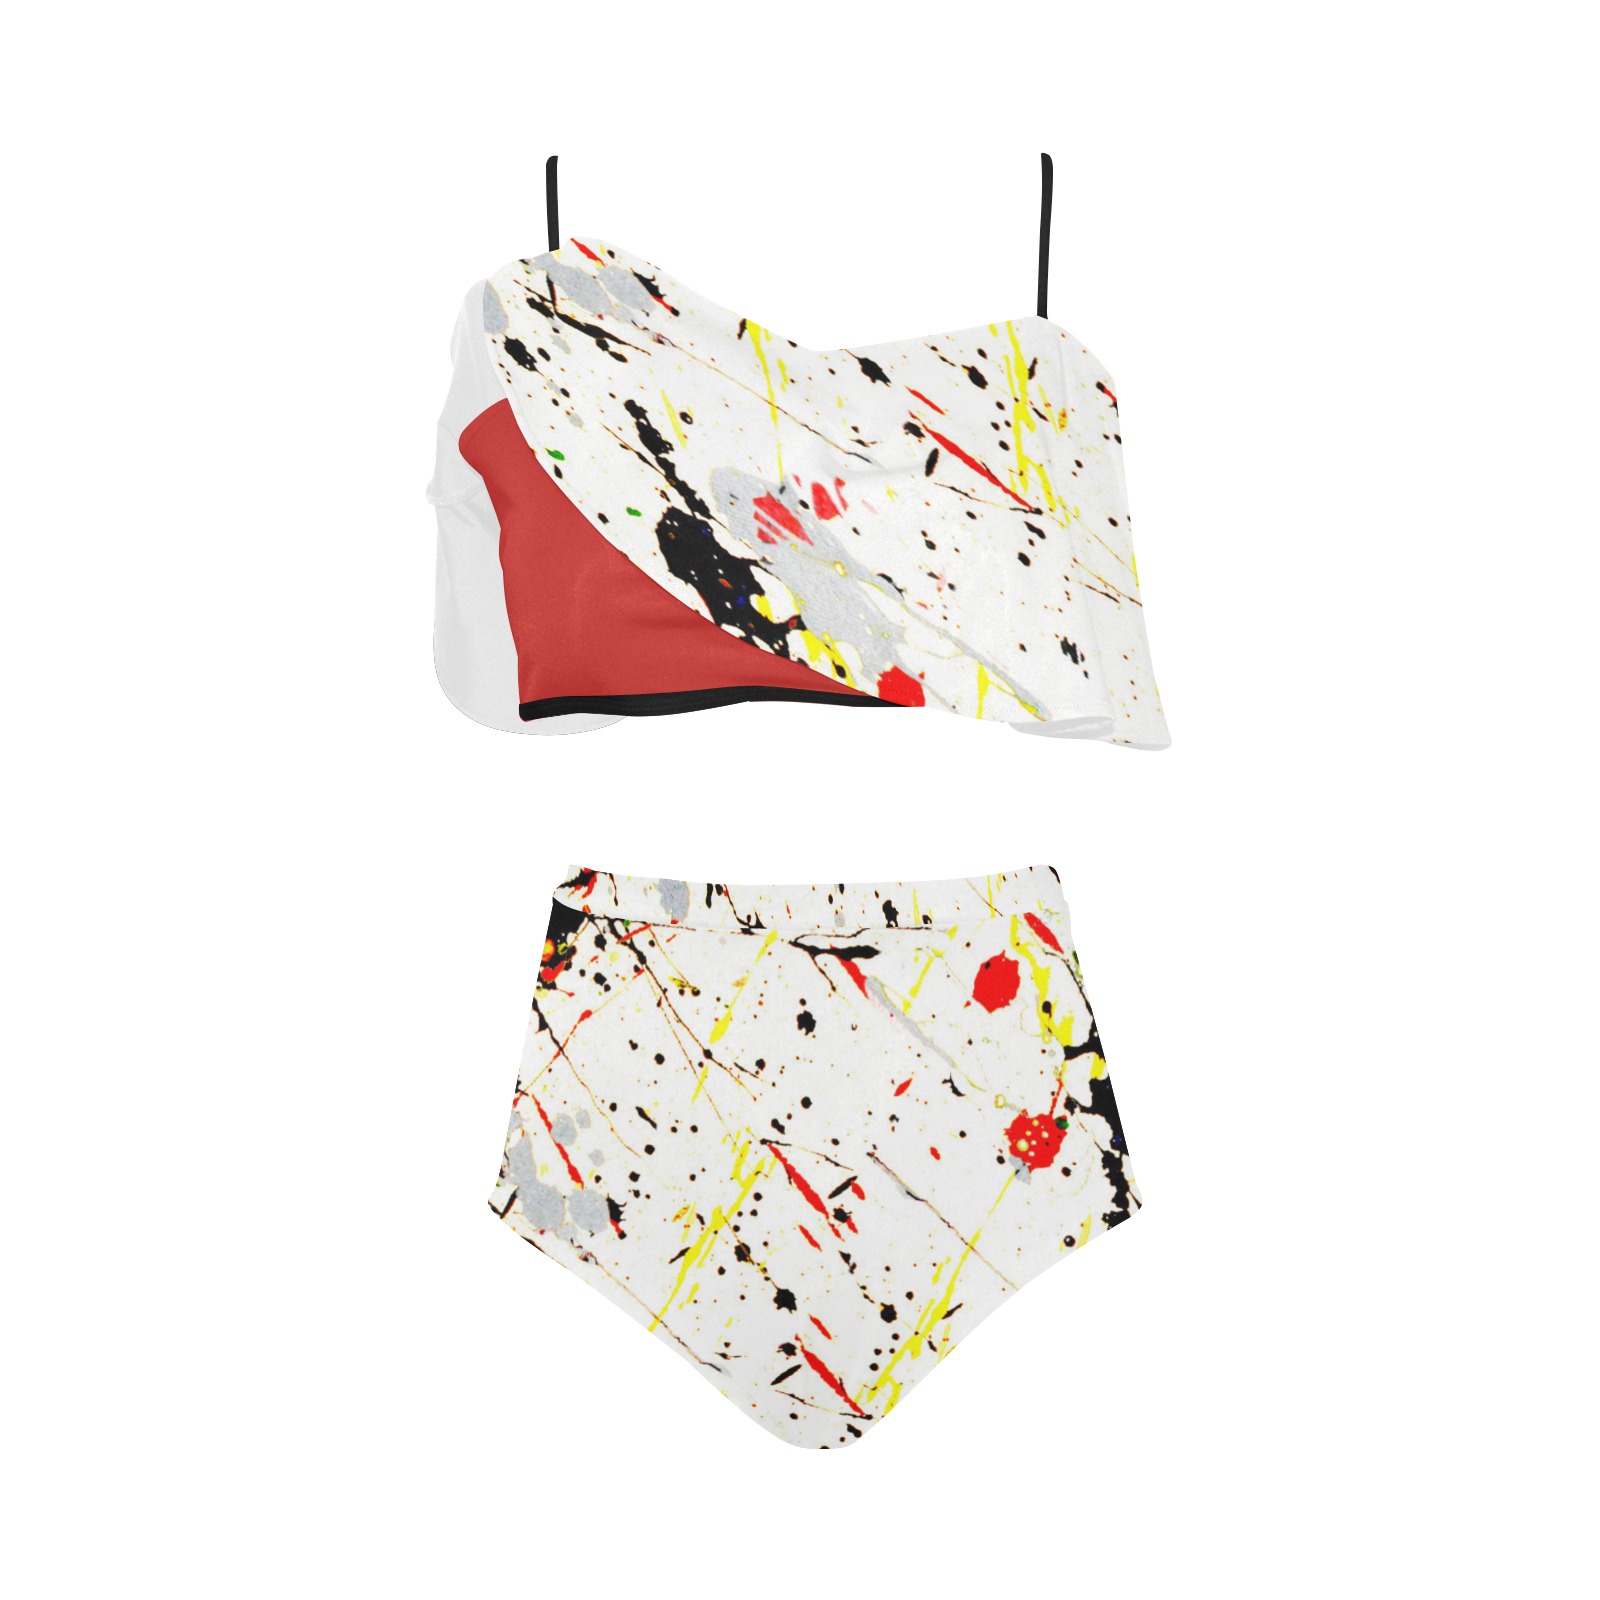 Yellow & Black Paint Splatter - Red High Waisted Ruffle Bikini Set (Model S13)